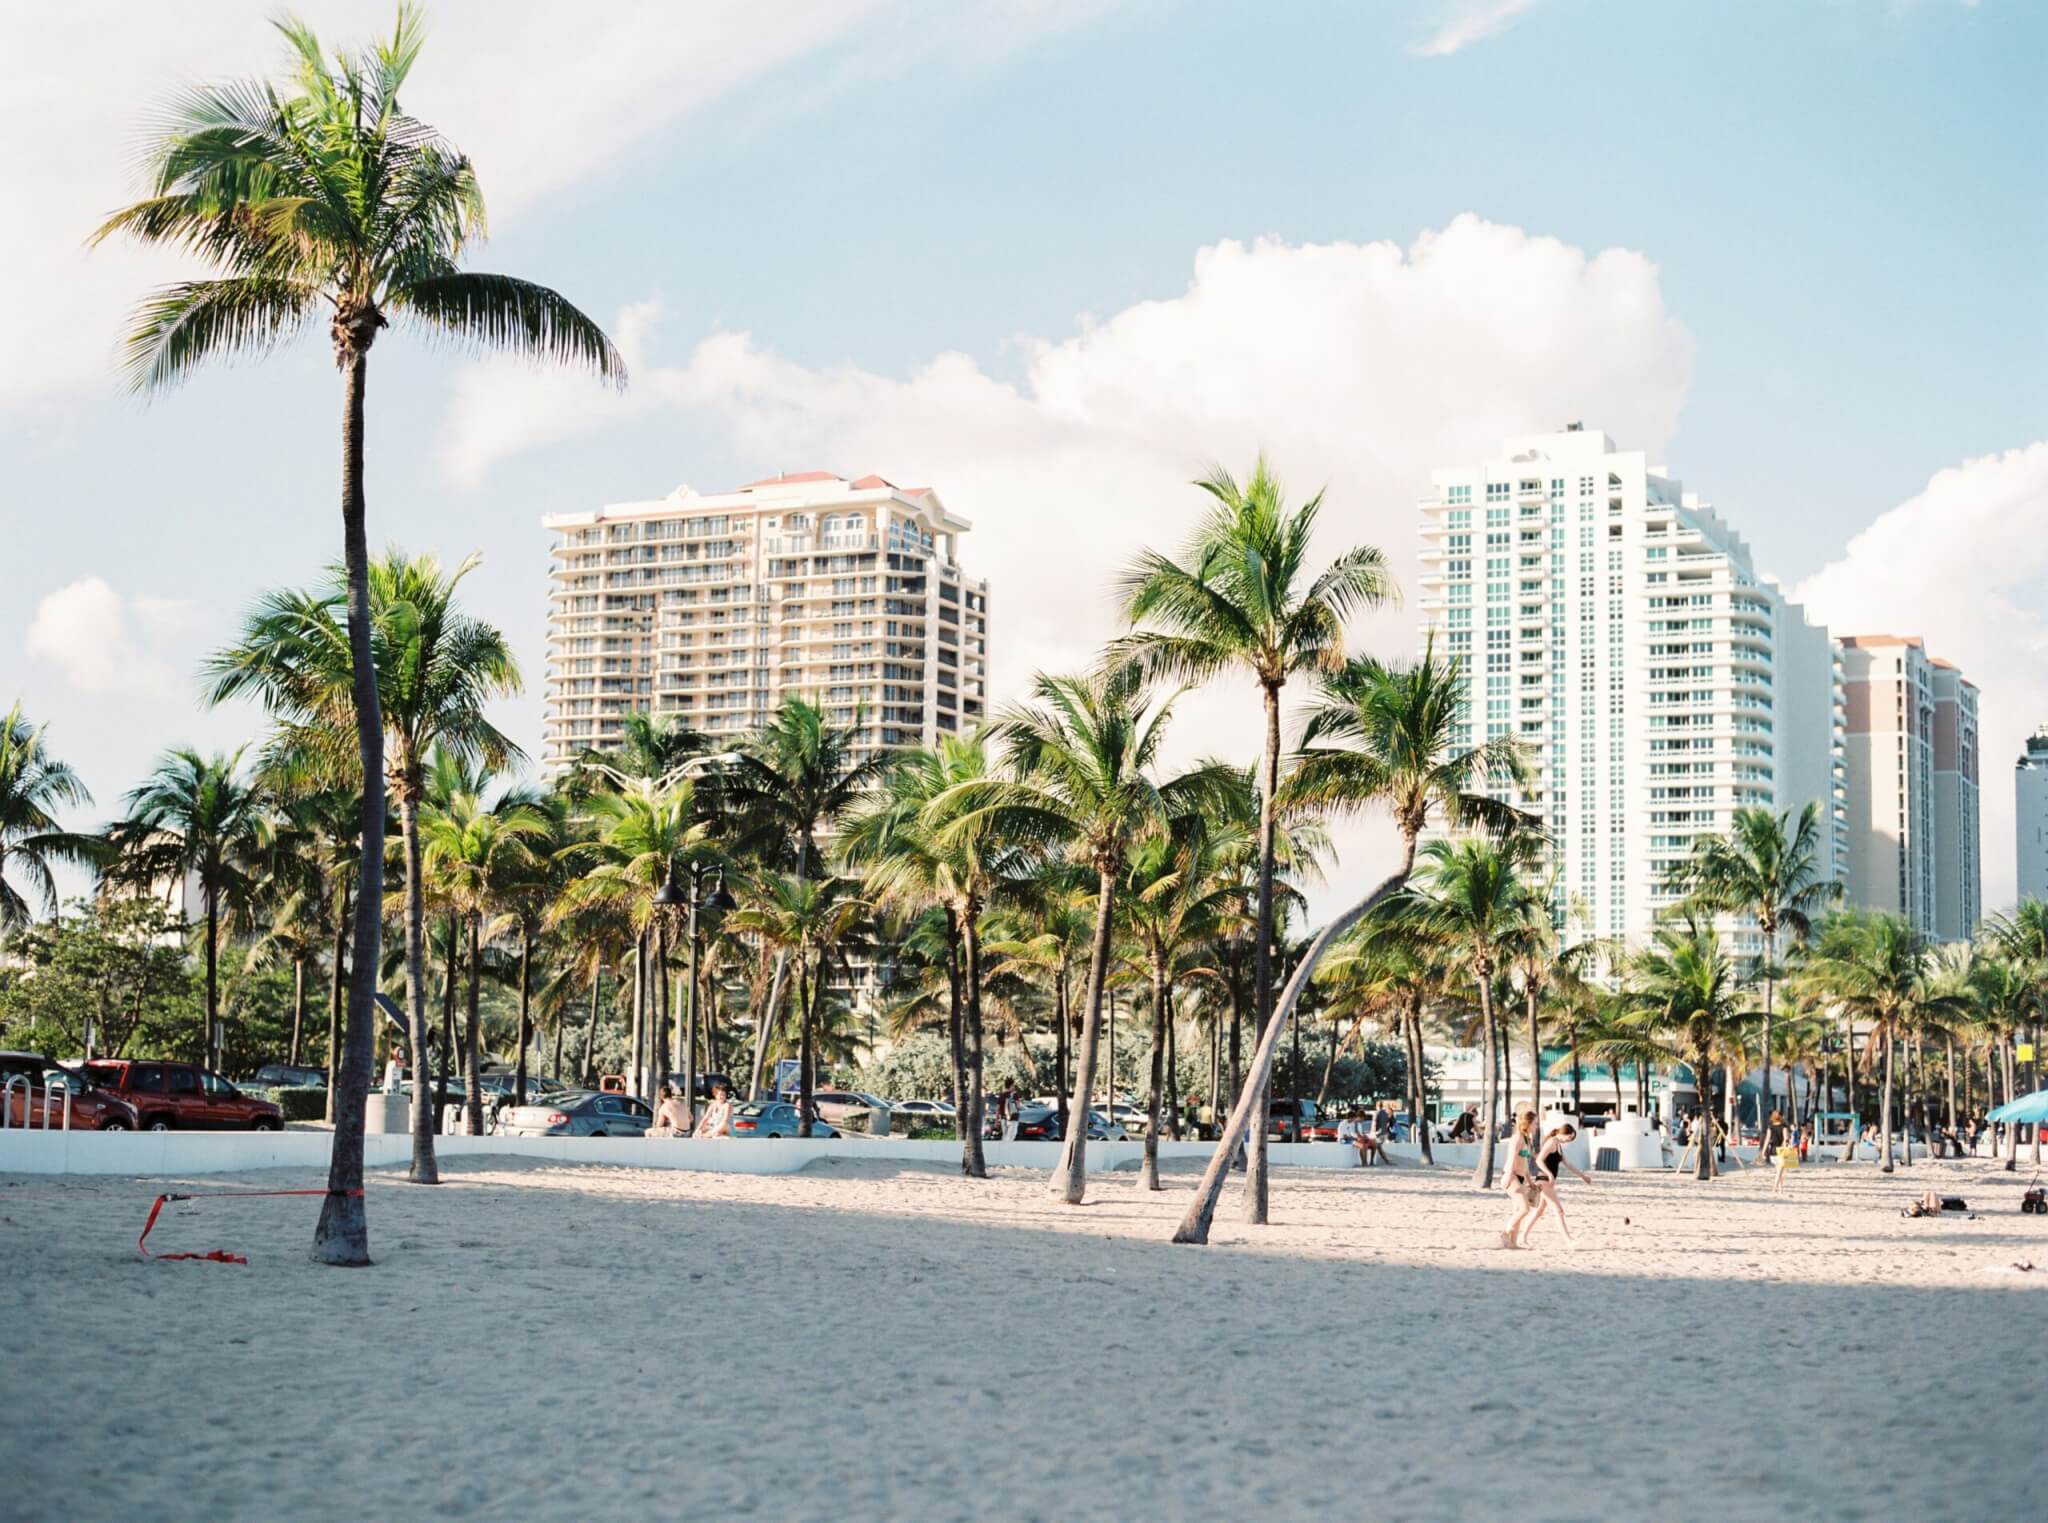 Miami, Florida buildings hidden behind palm trees.